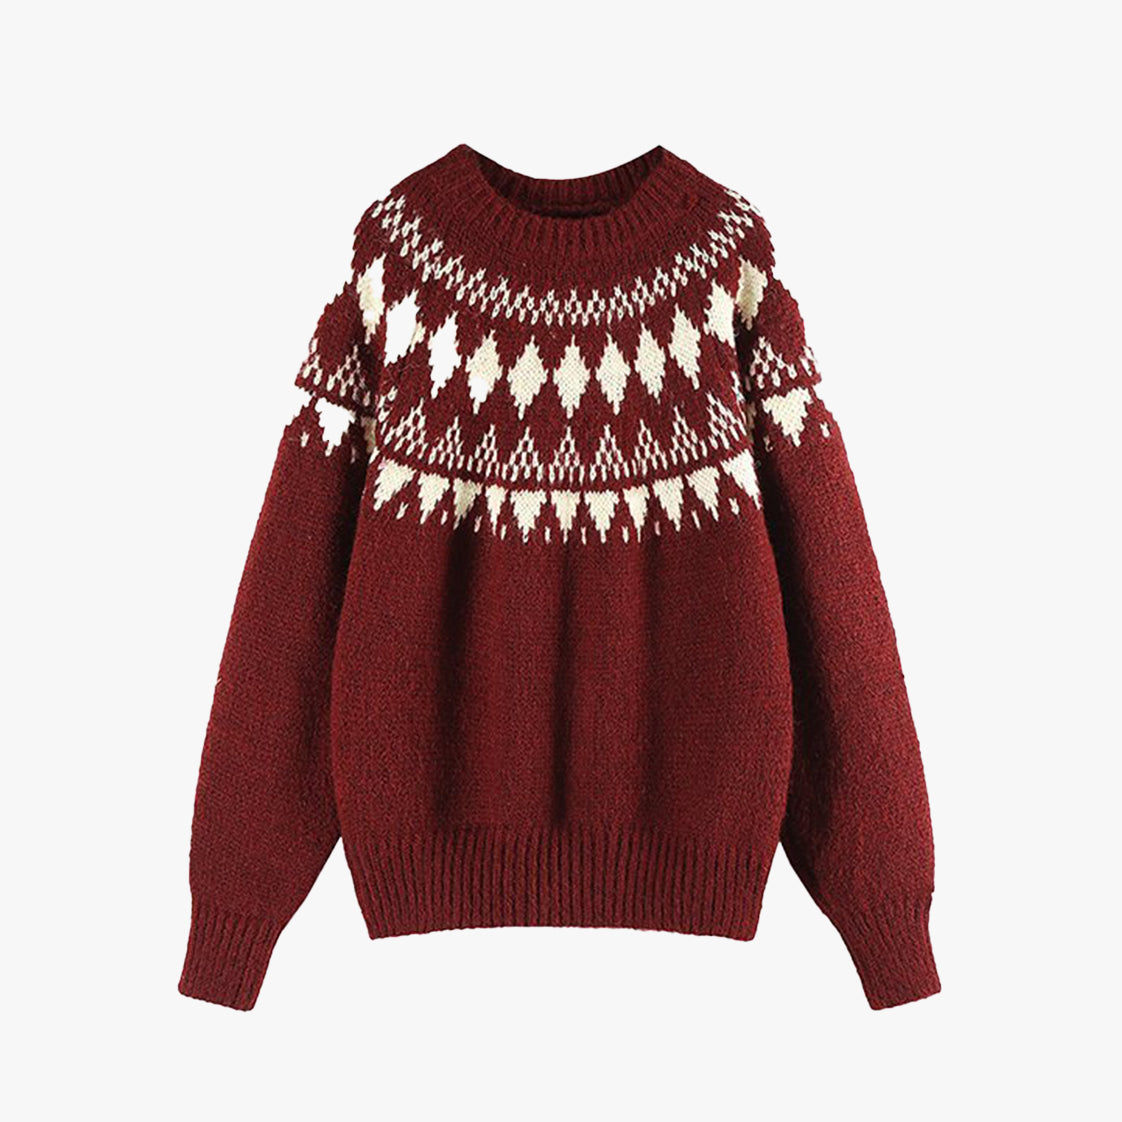 Retro Icelandic Knit Sweater